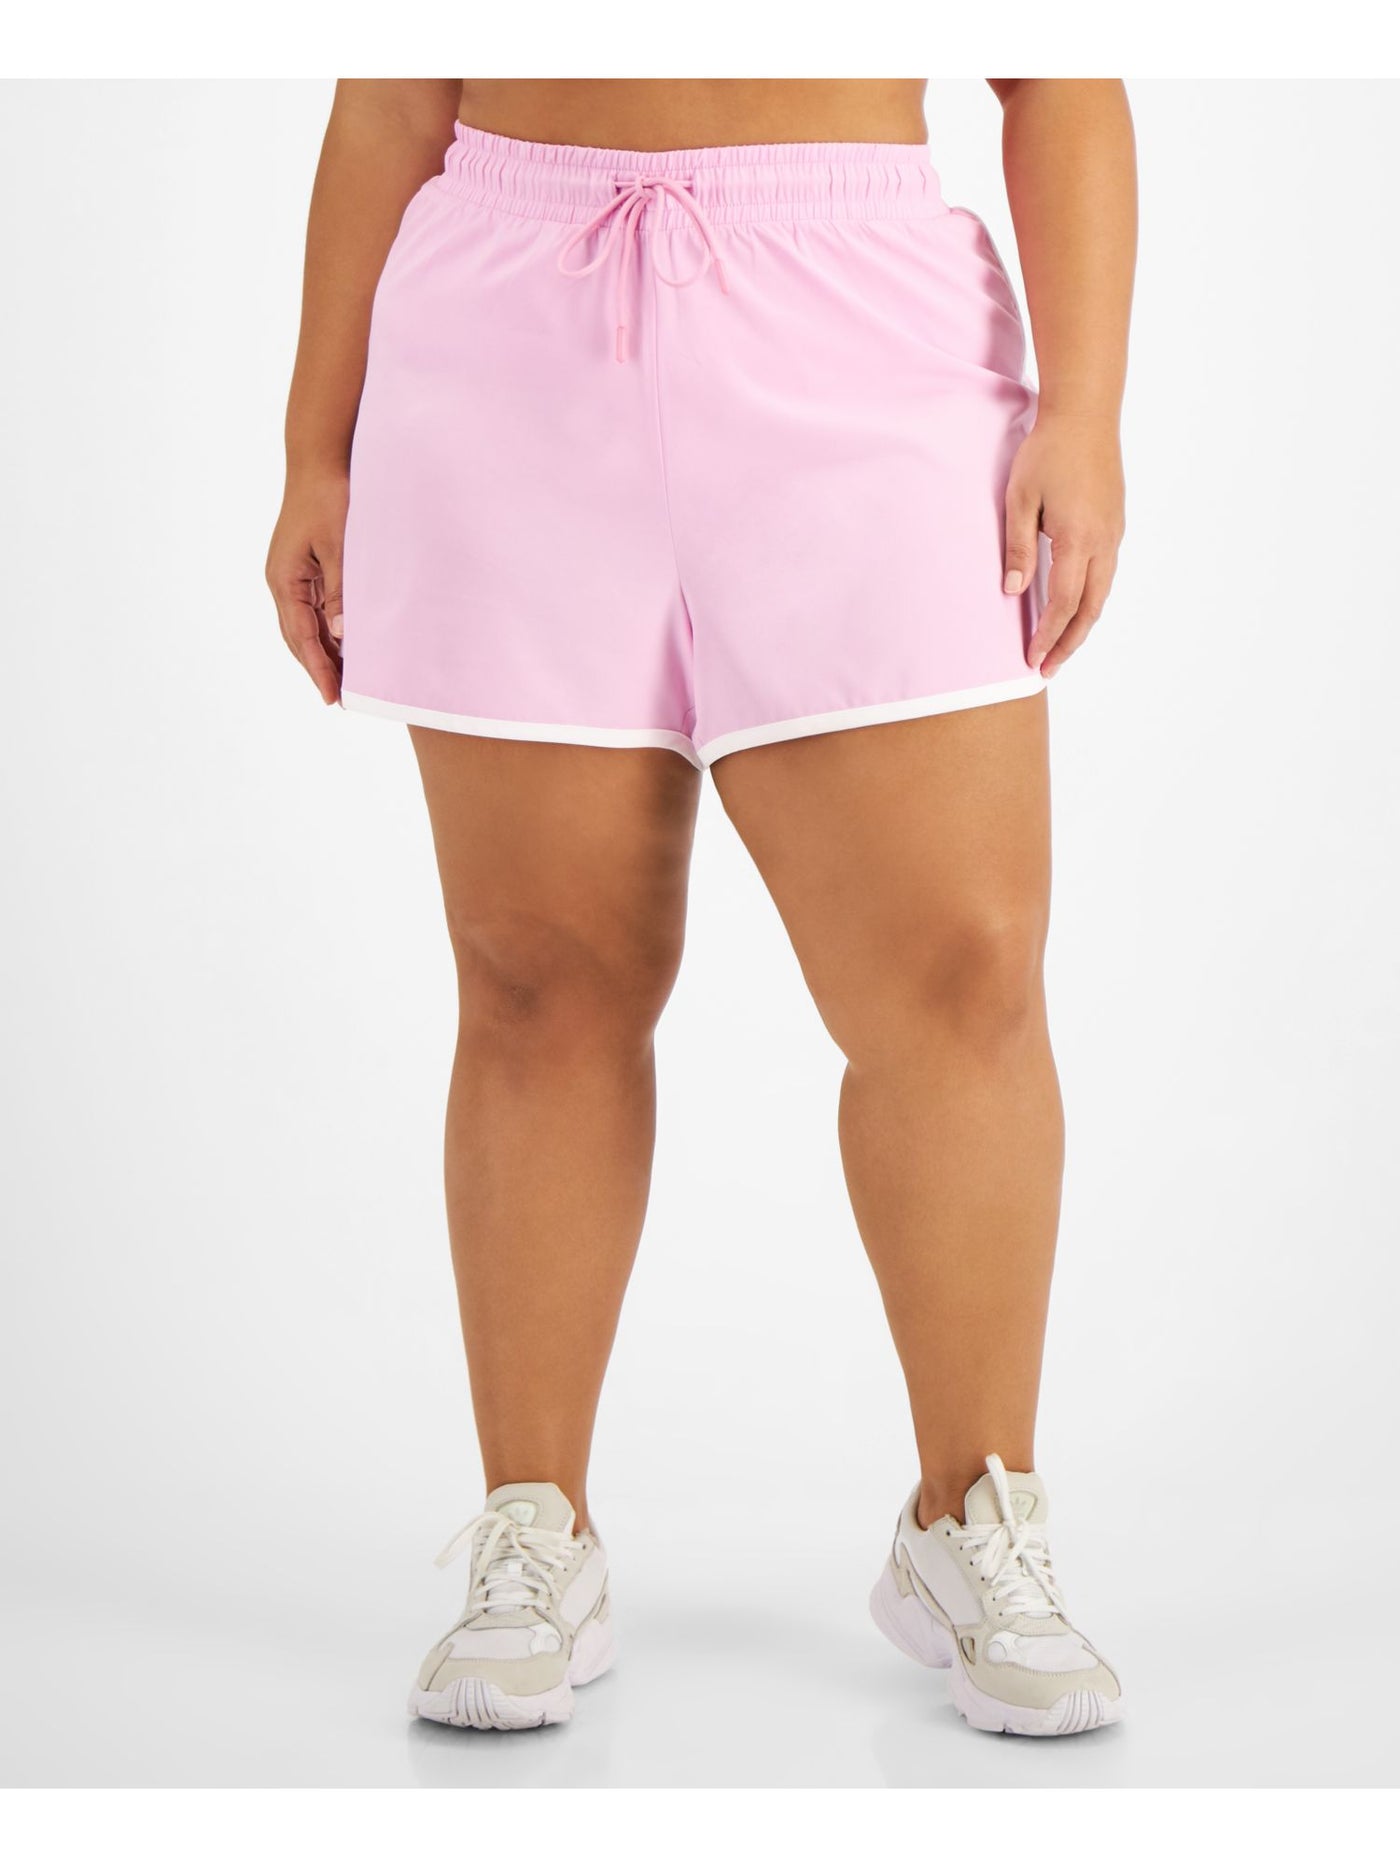 IDEOLOGY Womens Pink Lined Drawstring Waist Running Shorts Shorts Plus 2X